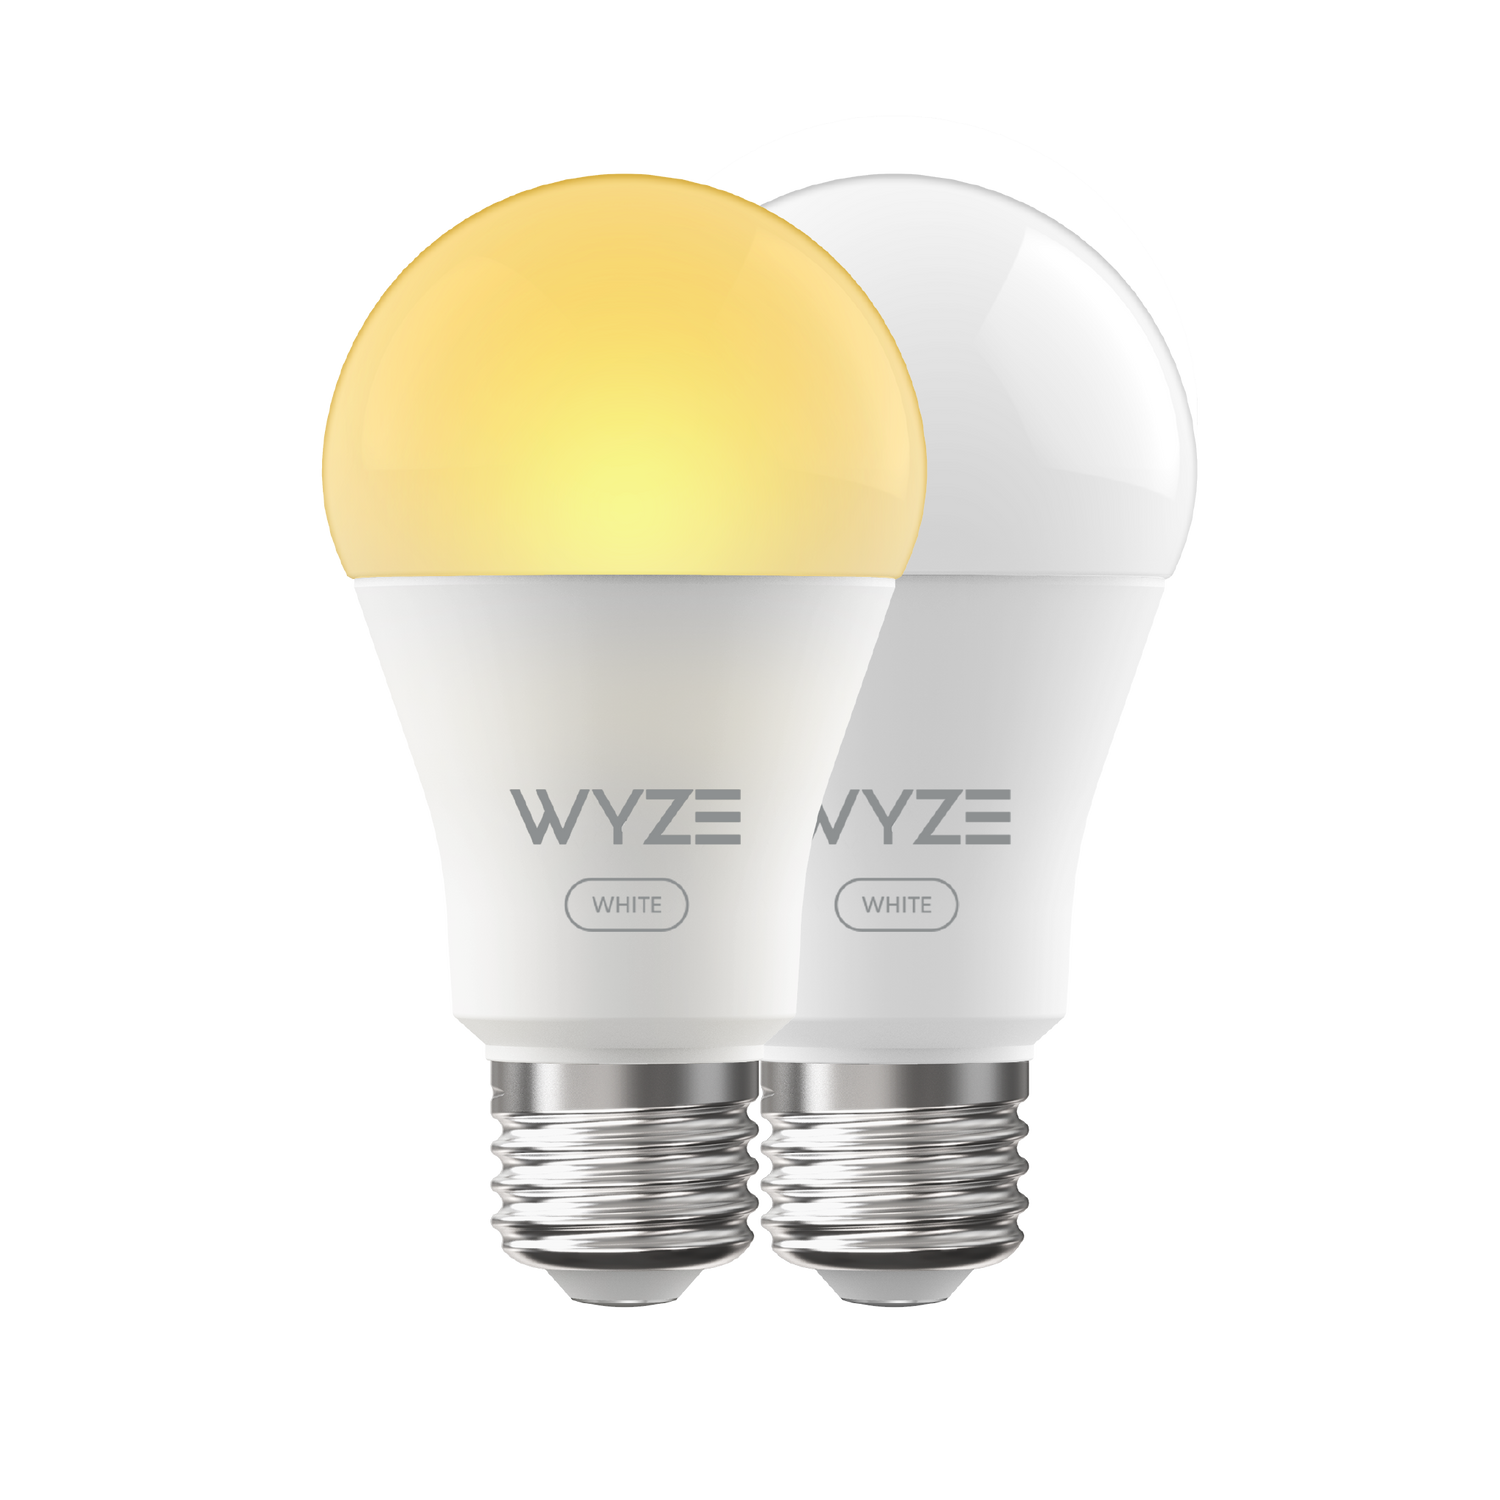 Best White Wifi & Dimmable Smart Light Bulbs | Wyze Bulb White